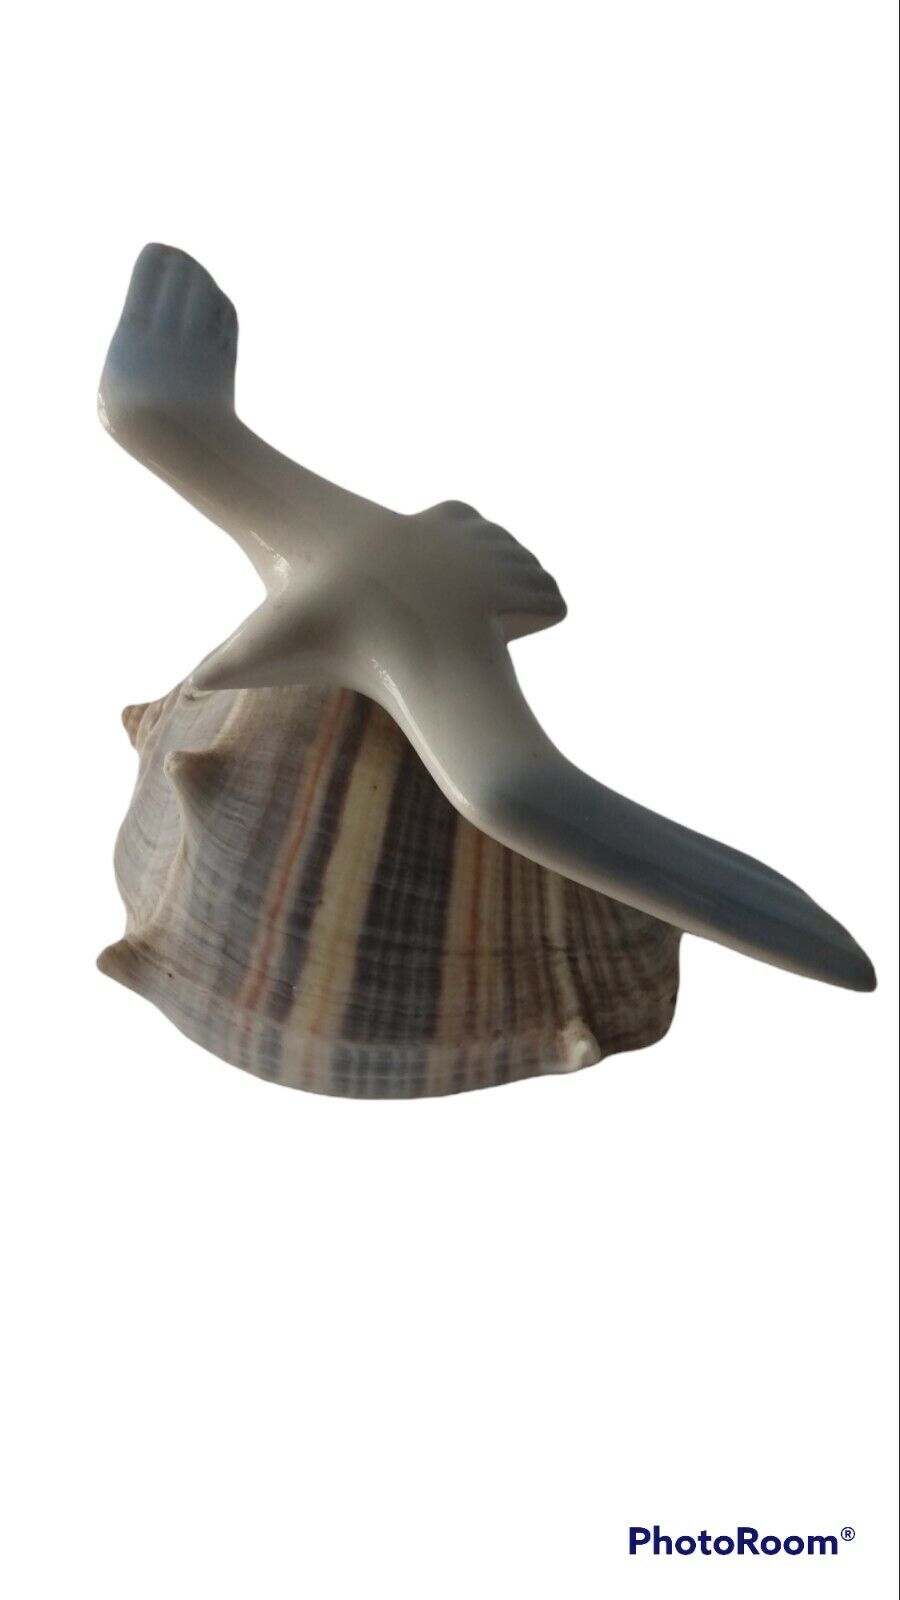 VTG Seagull Shorebird Beach Crown Conch Seashell Art Sculpture by Crowning Touch